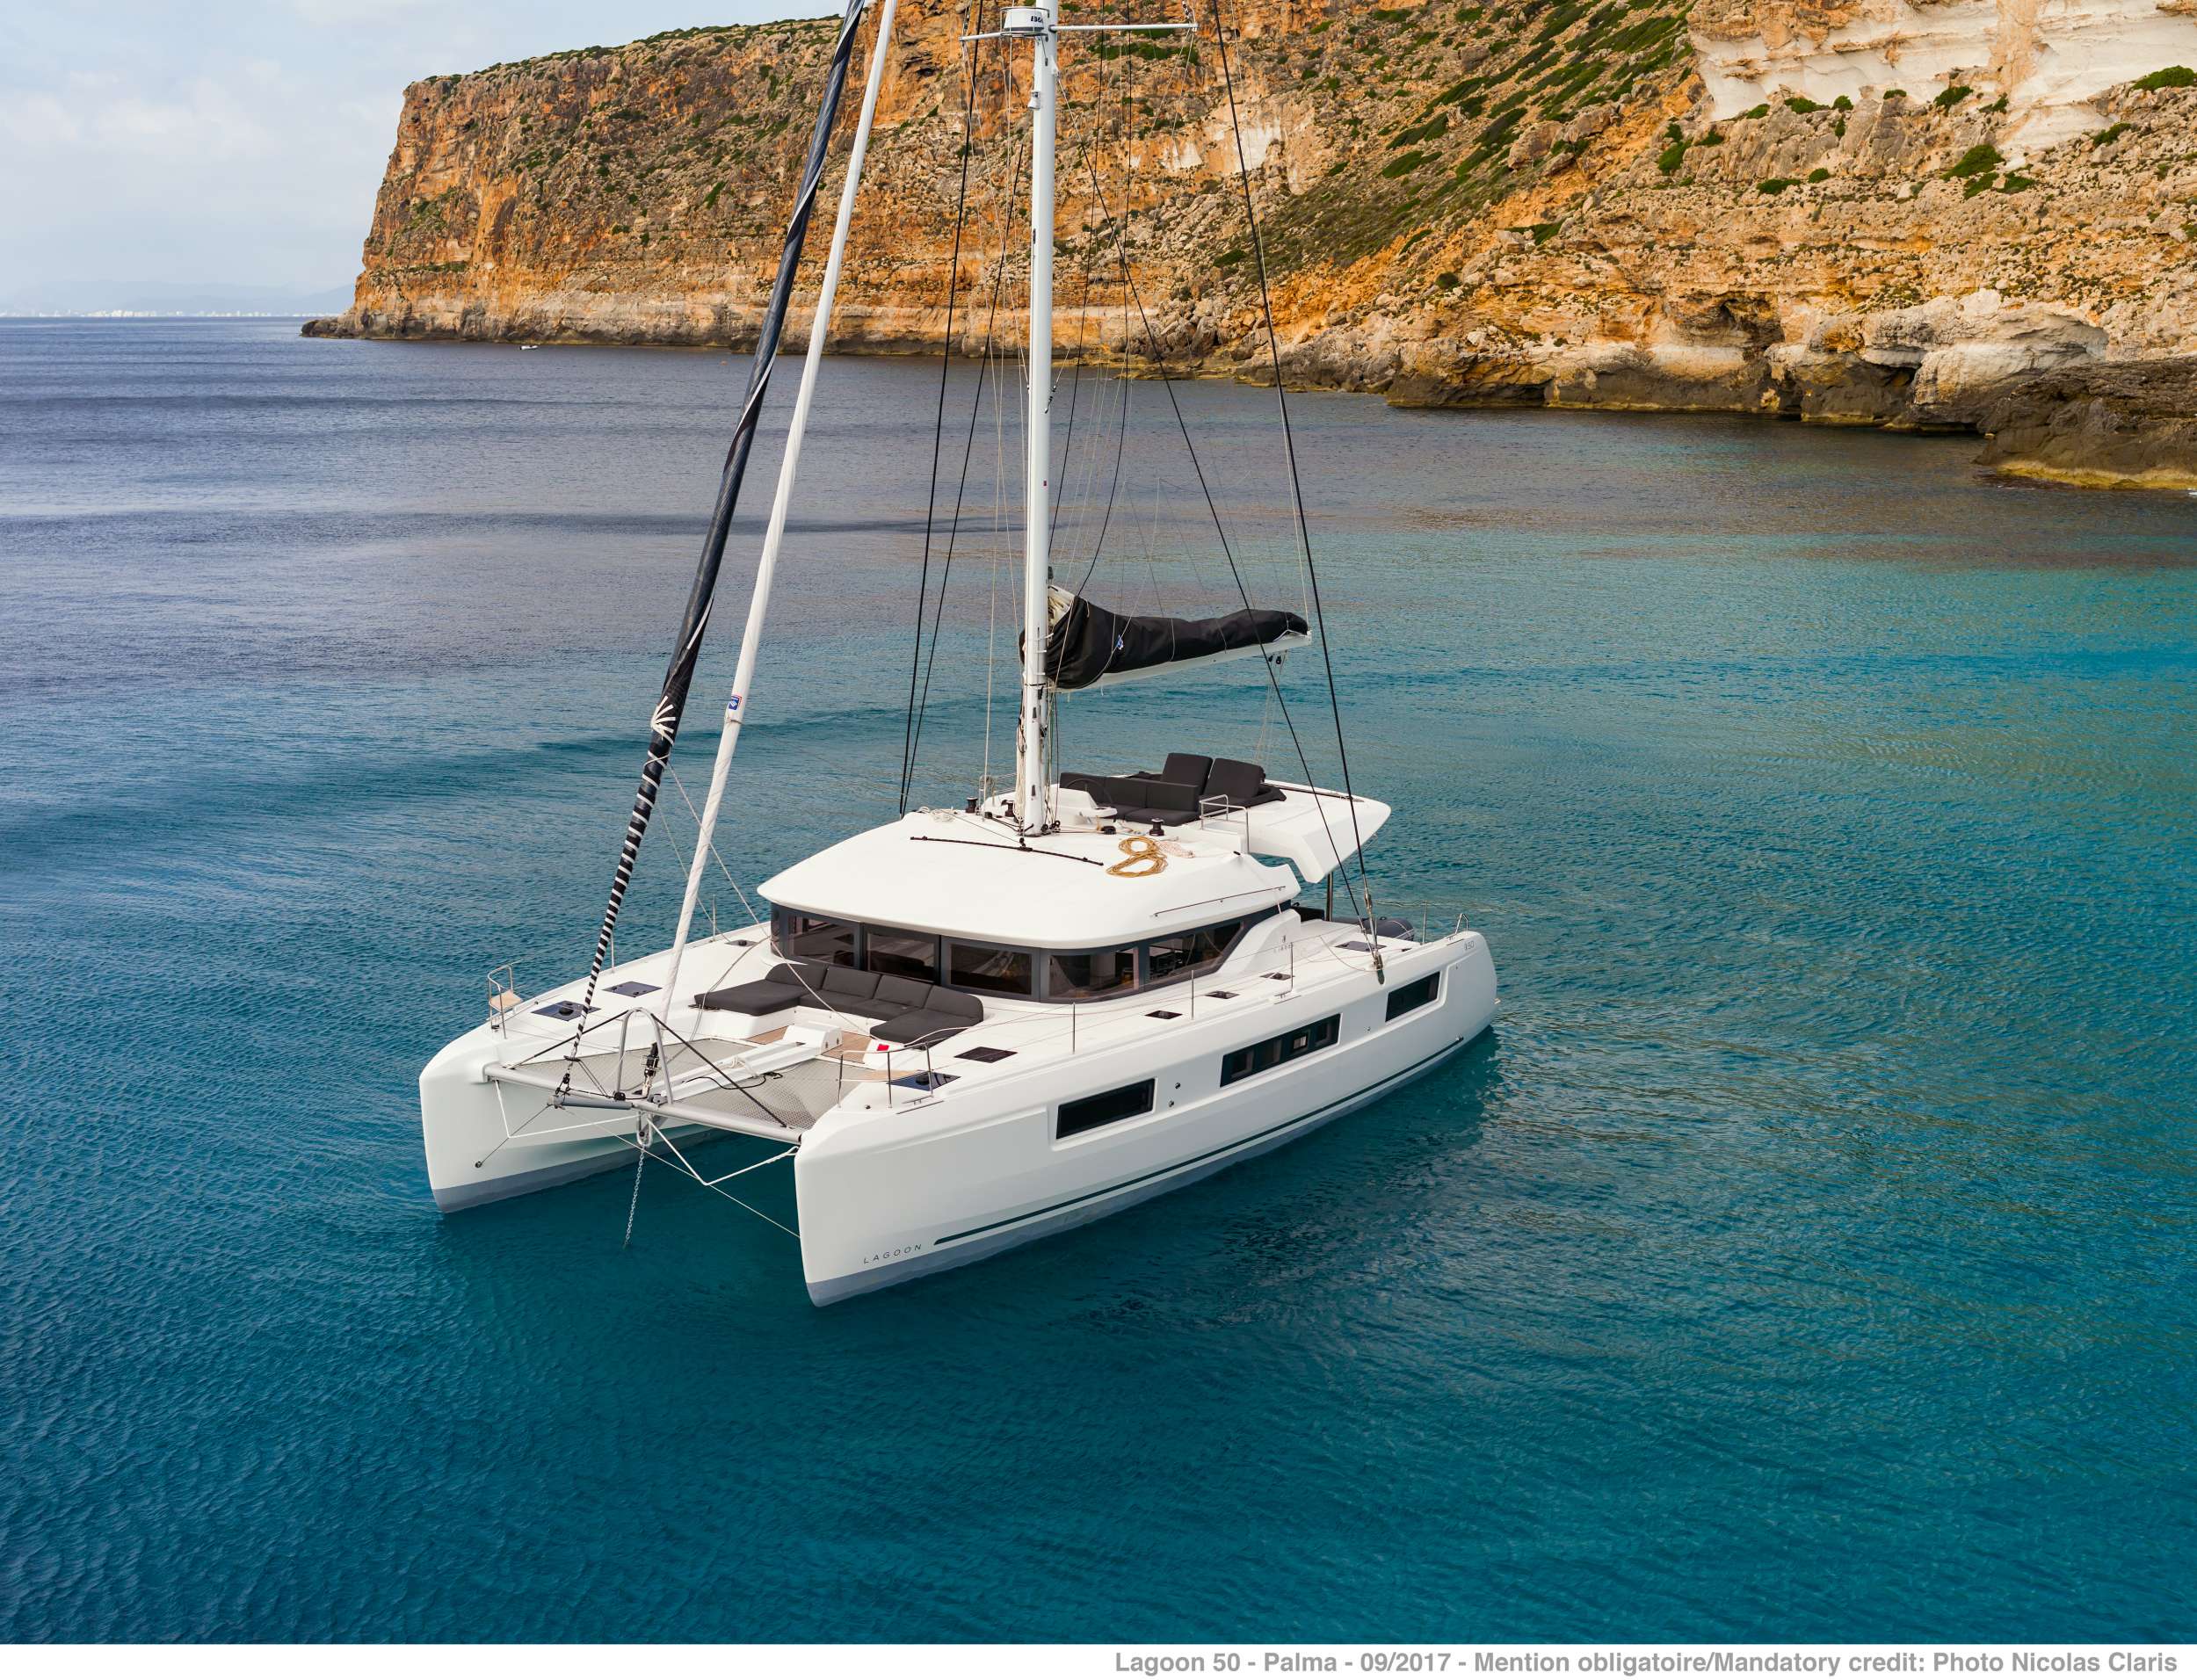 ONEIDA 2 - Yacht Charter Palaio Faliro & Boat hire in Greece 1